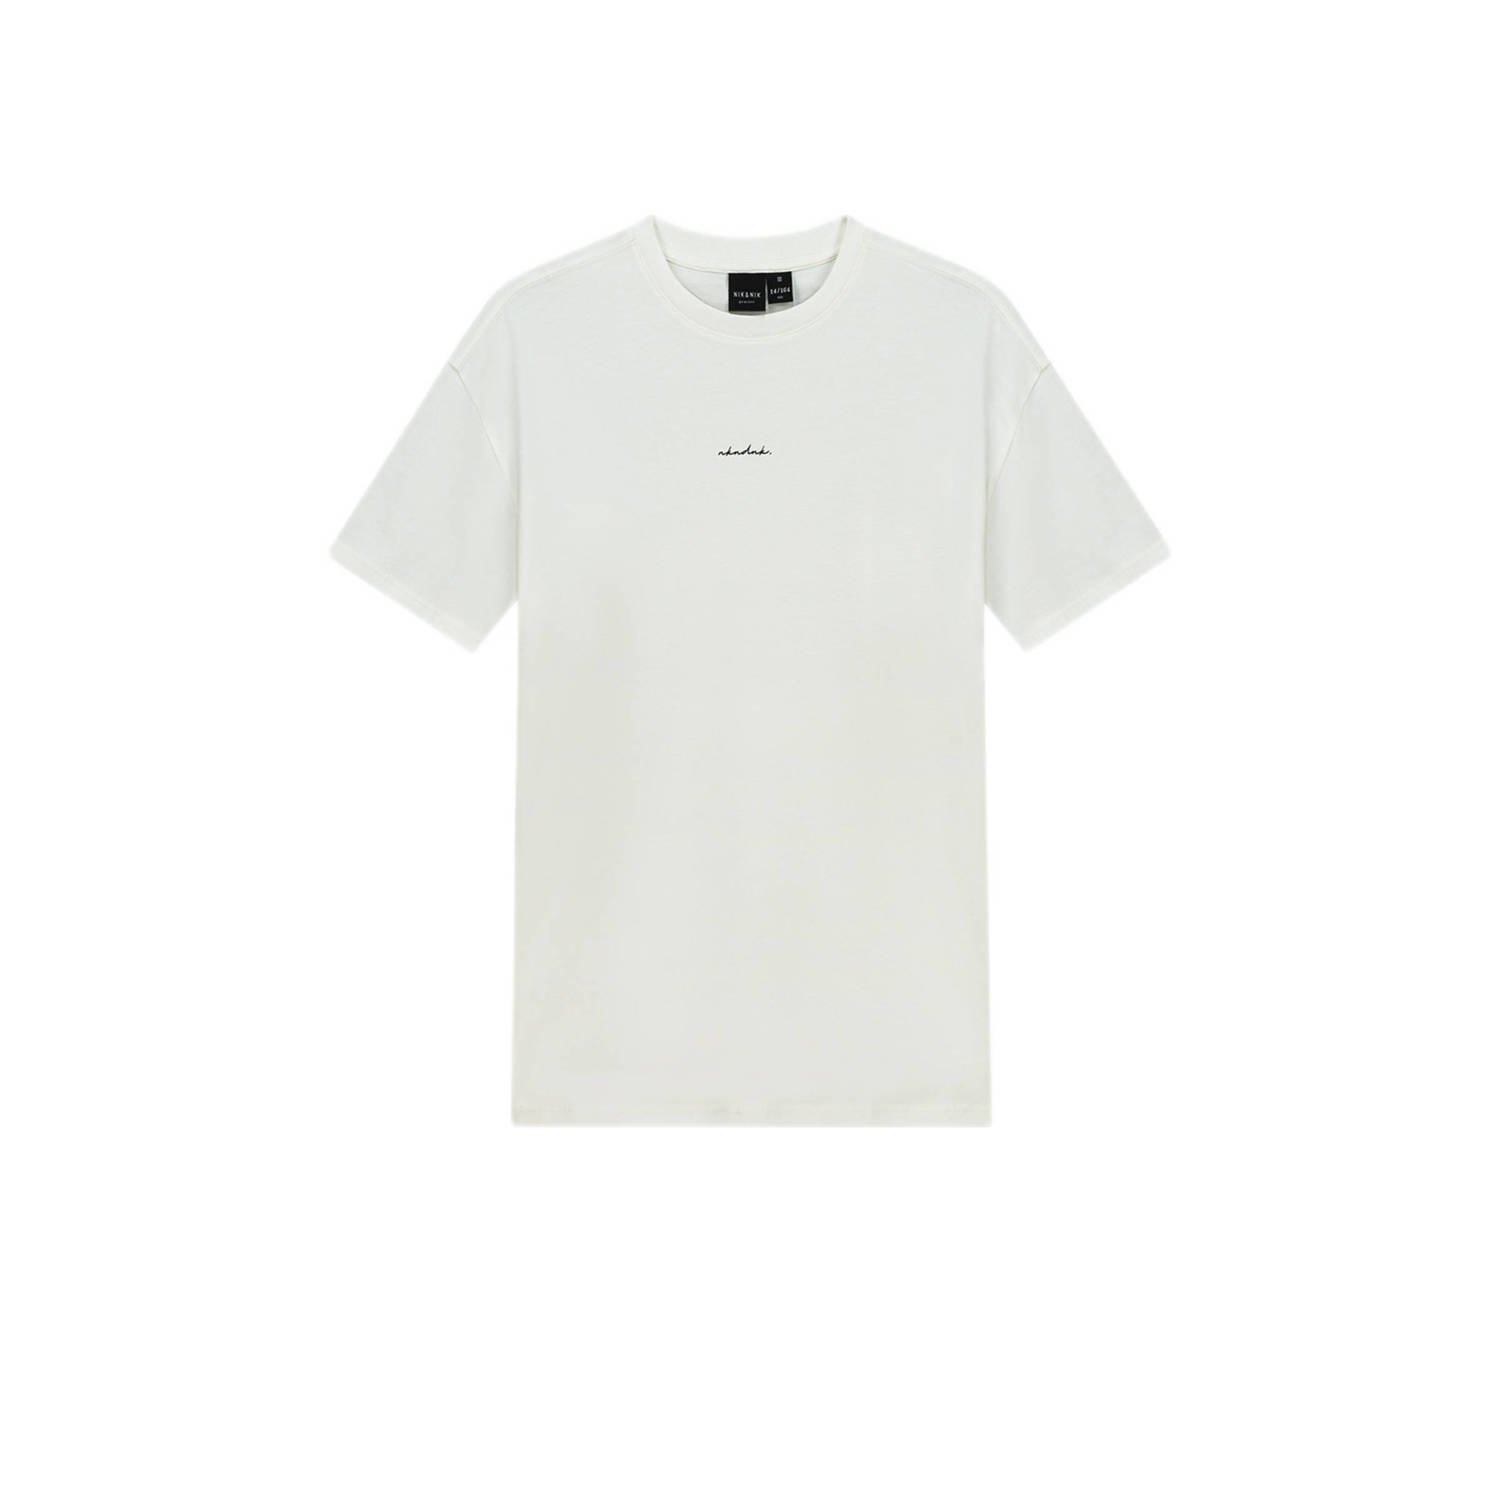 NIK&NIK T-shirt Deluxe met backprint offwhite